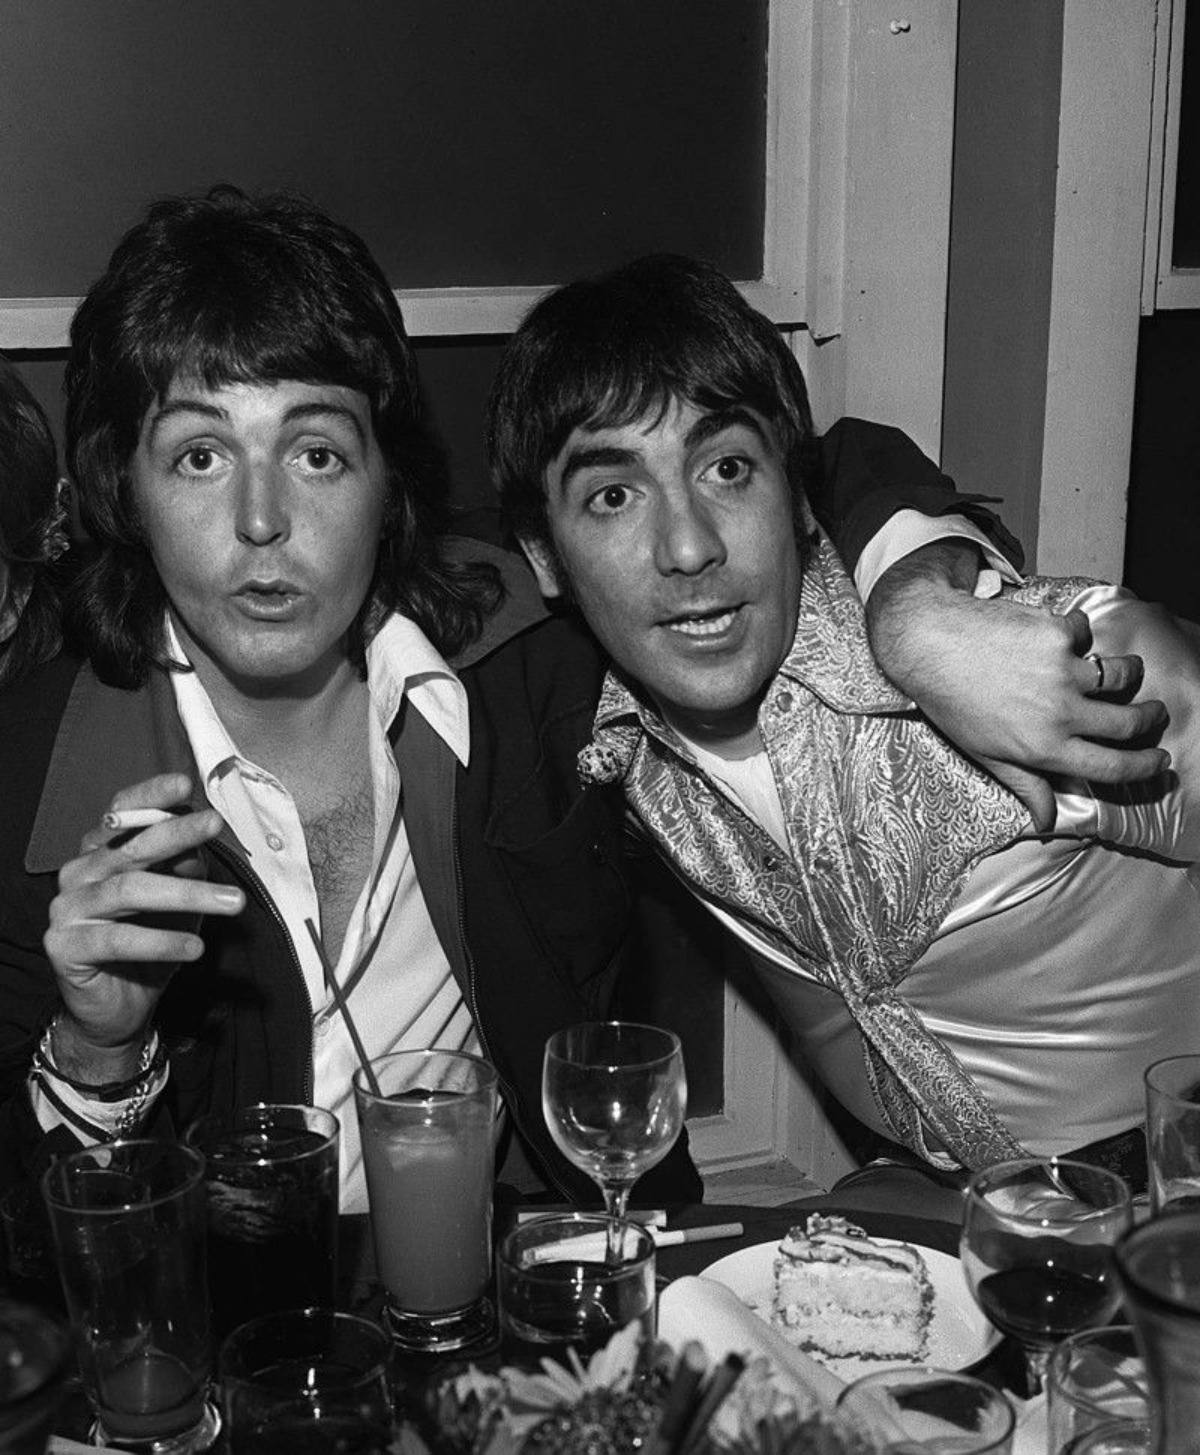 Paul McCartney and Keith Moon